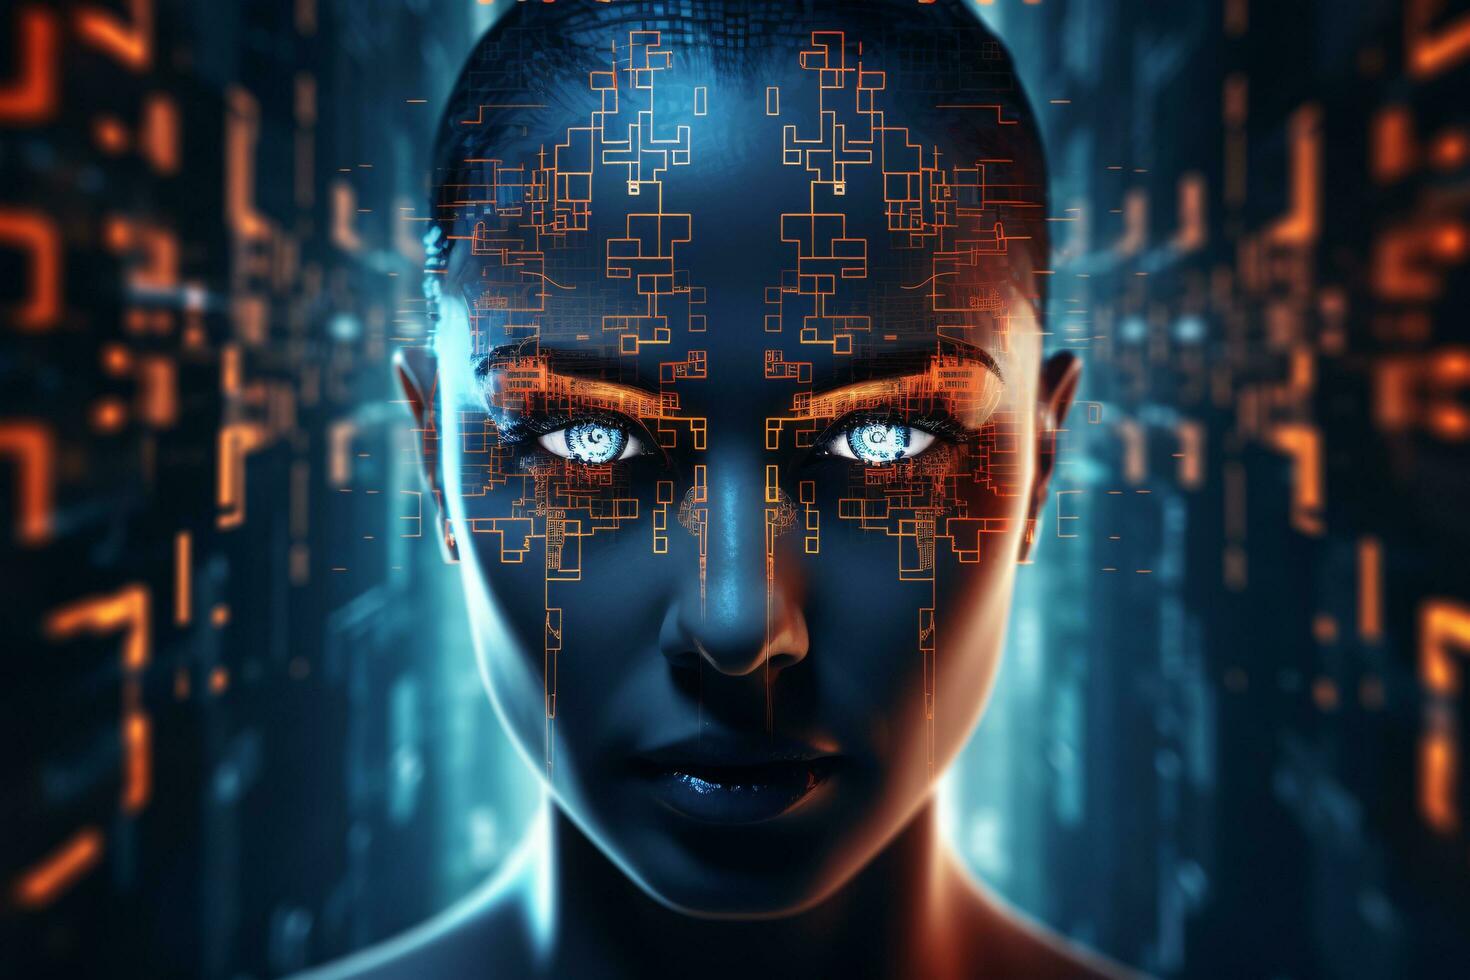 Futuristic human Artificial Intelligence photo